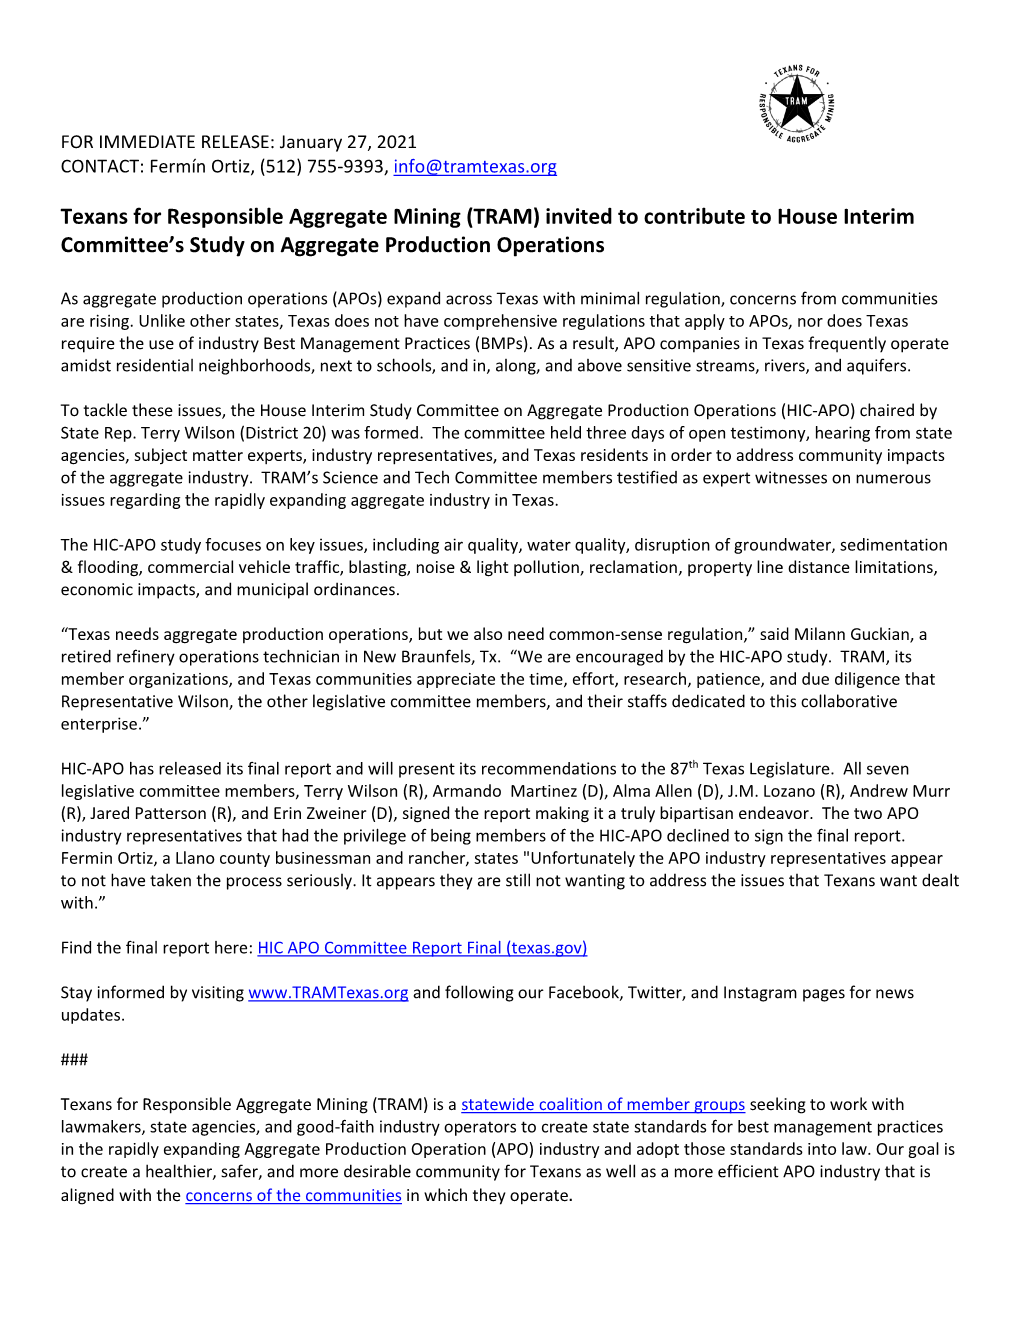 TRAM Press Release